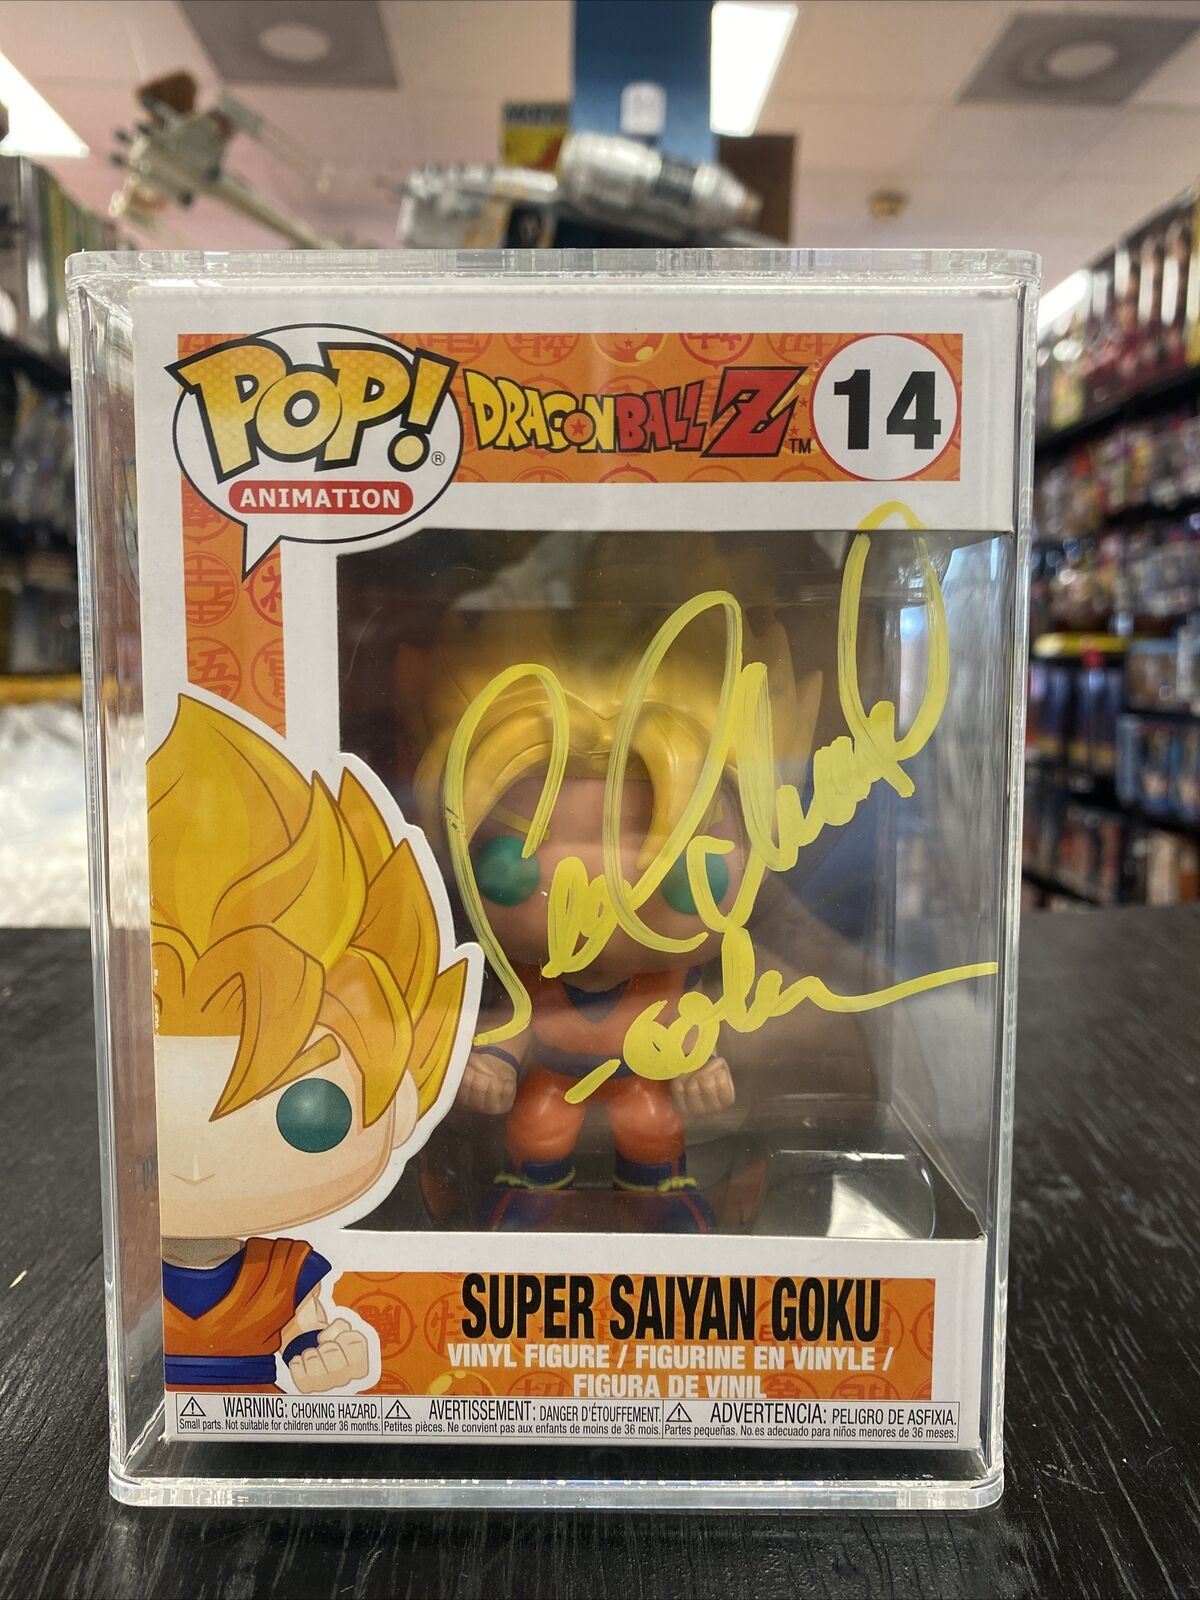 Funko Pop! Dragon Ball Z: Super Saiyan Goku